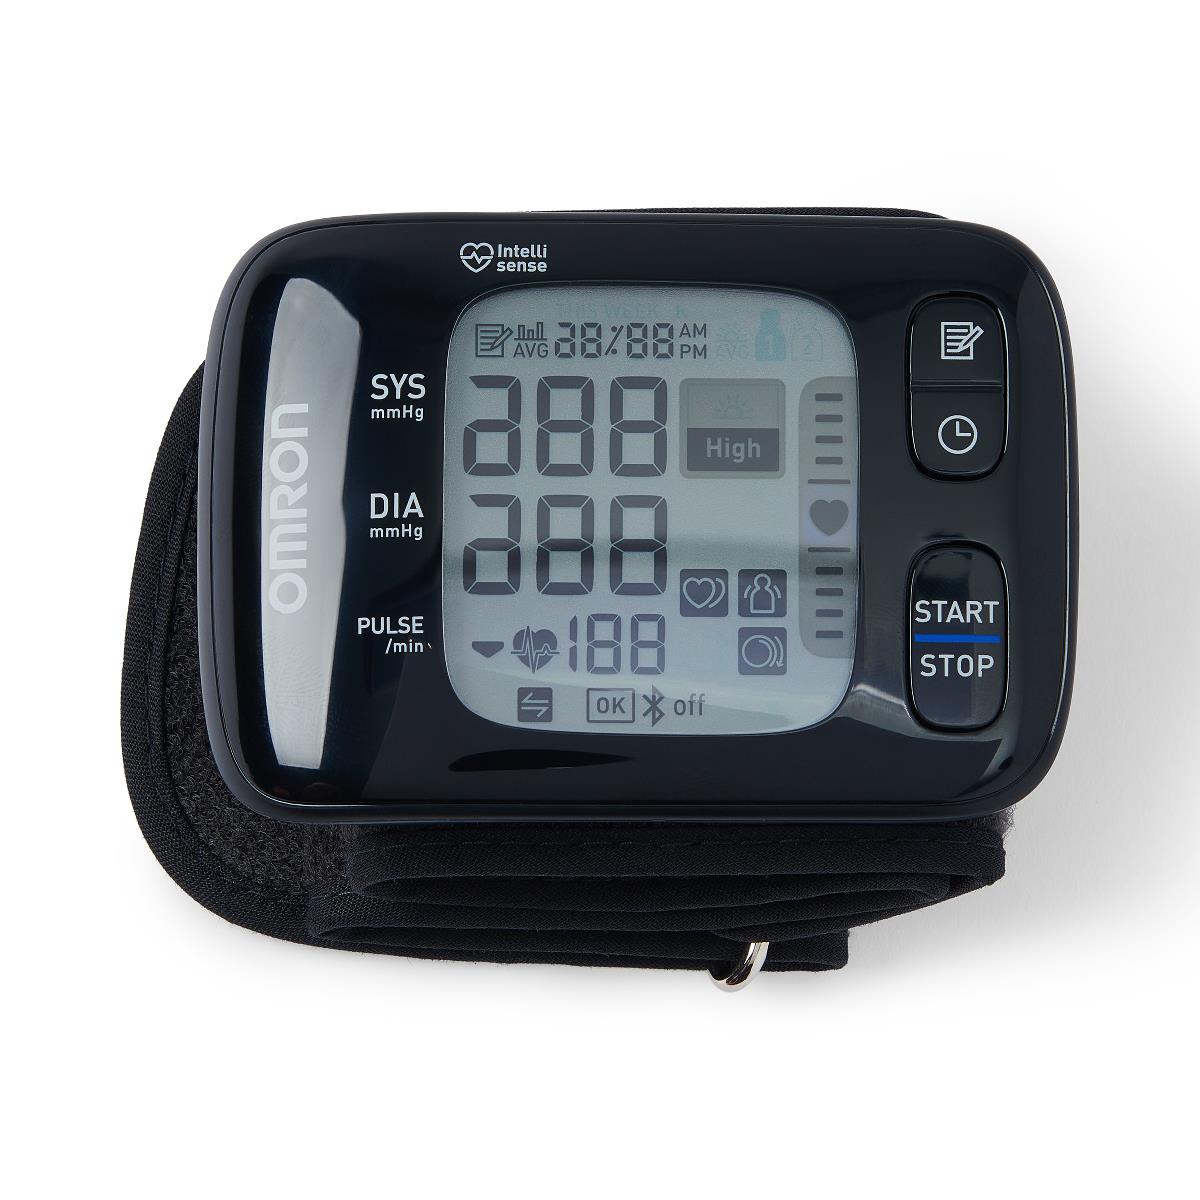 Omron 3 Series Wrist Blood Pressure Monitor (BP6100) - Home BP